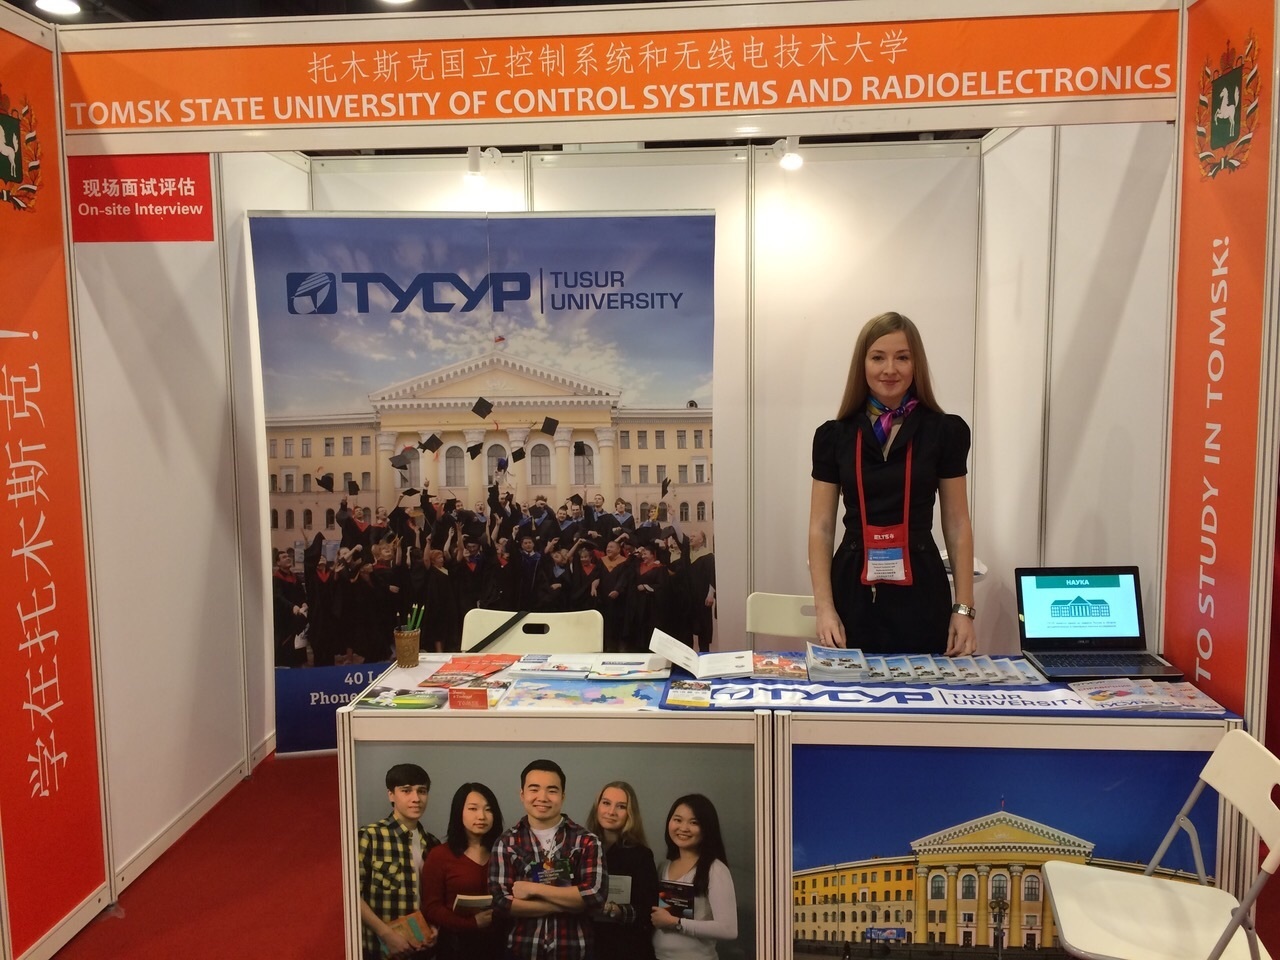 TUSUR University joined Tomsk delegation at China Education Expo 2014